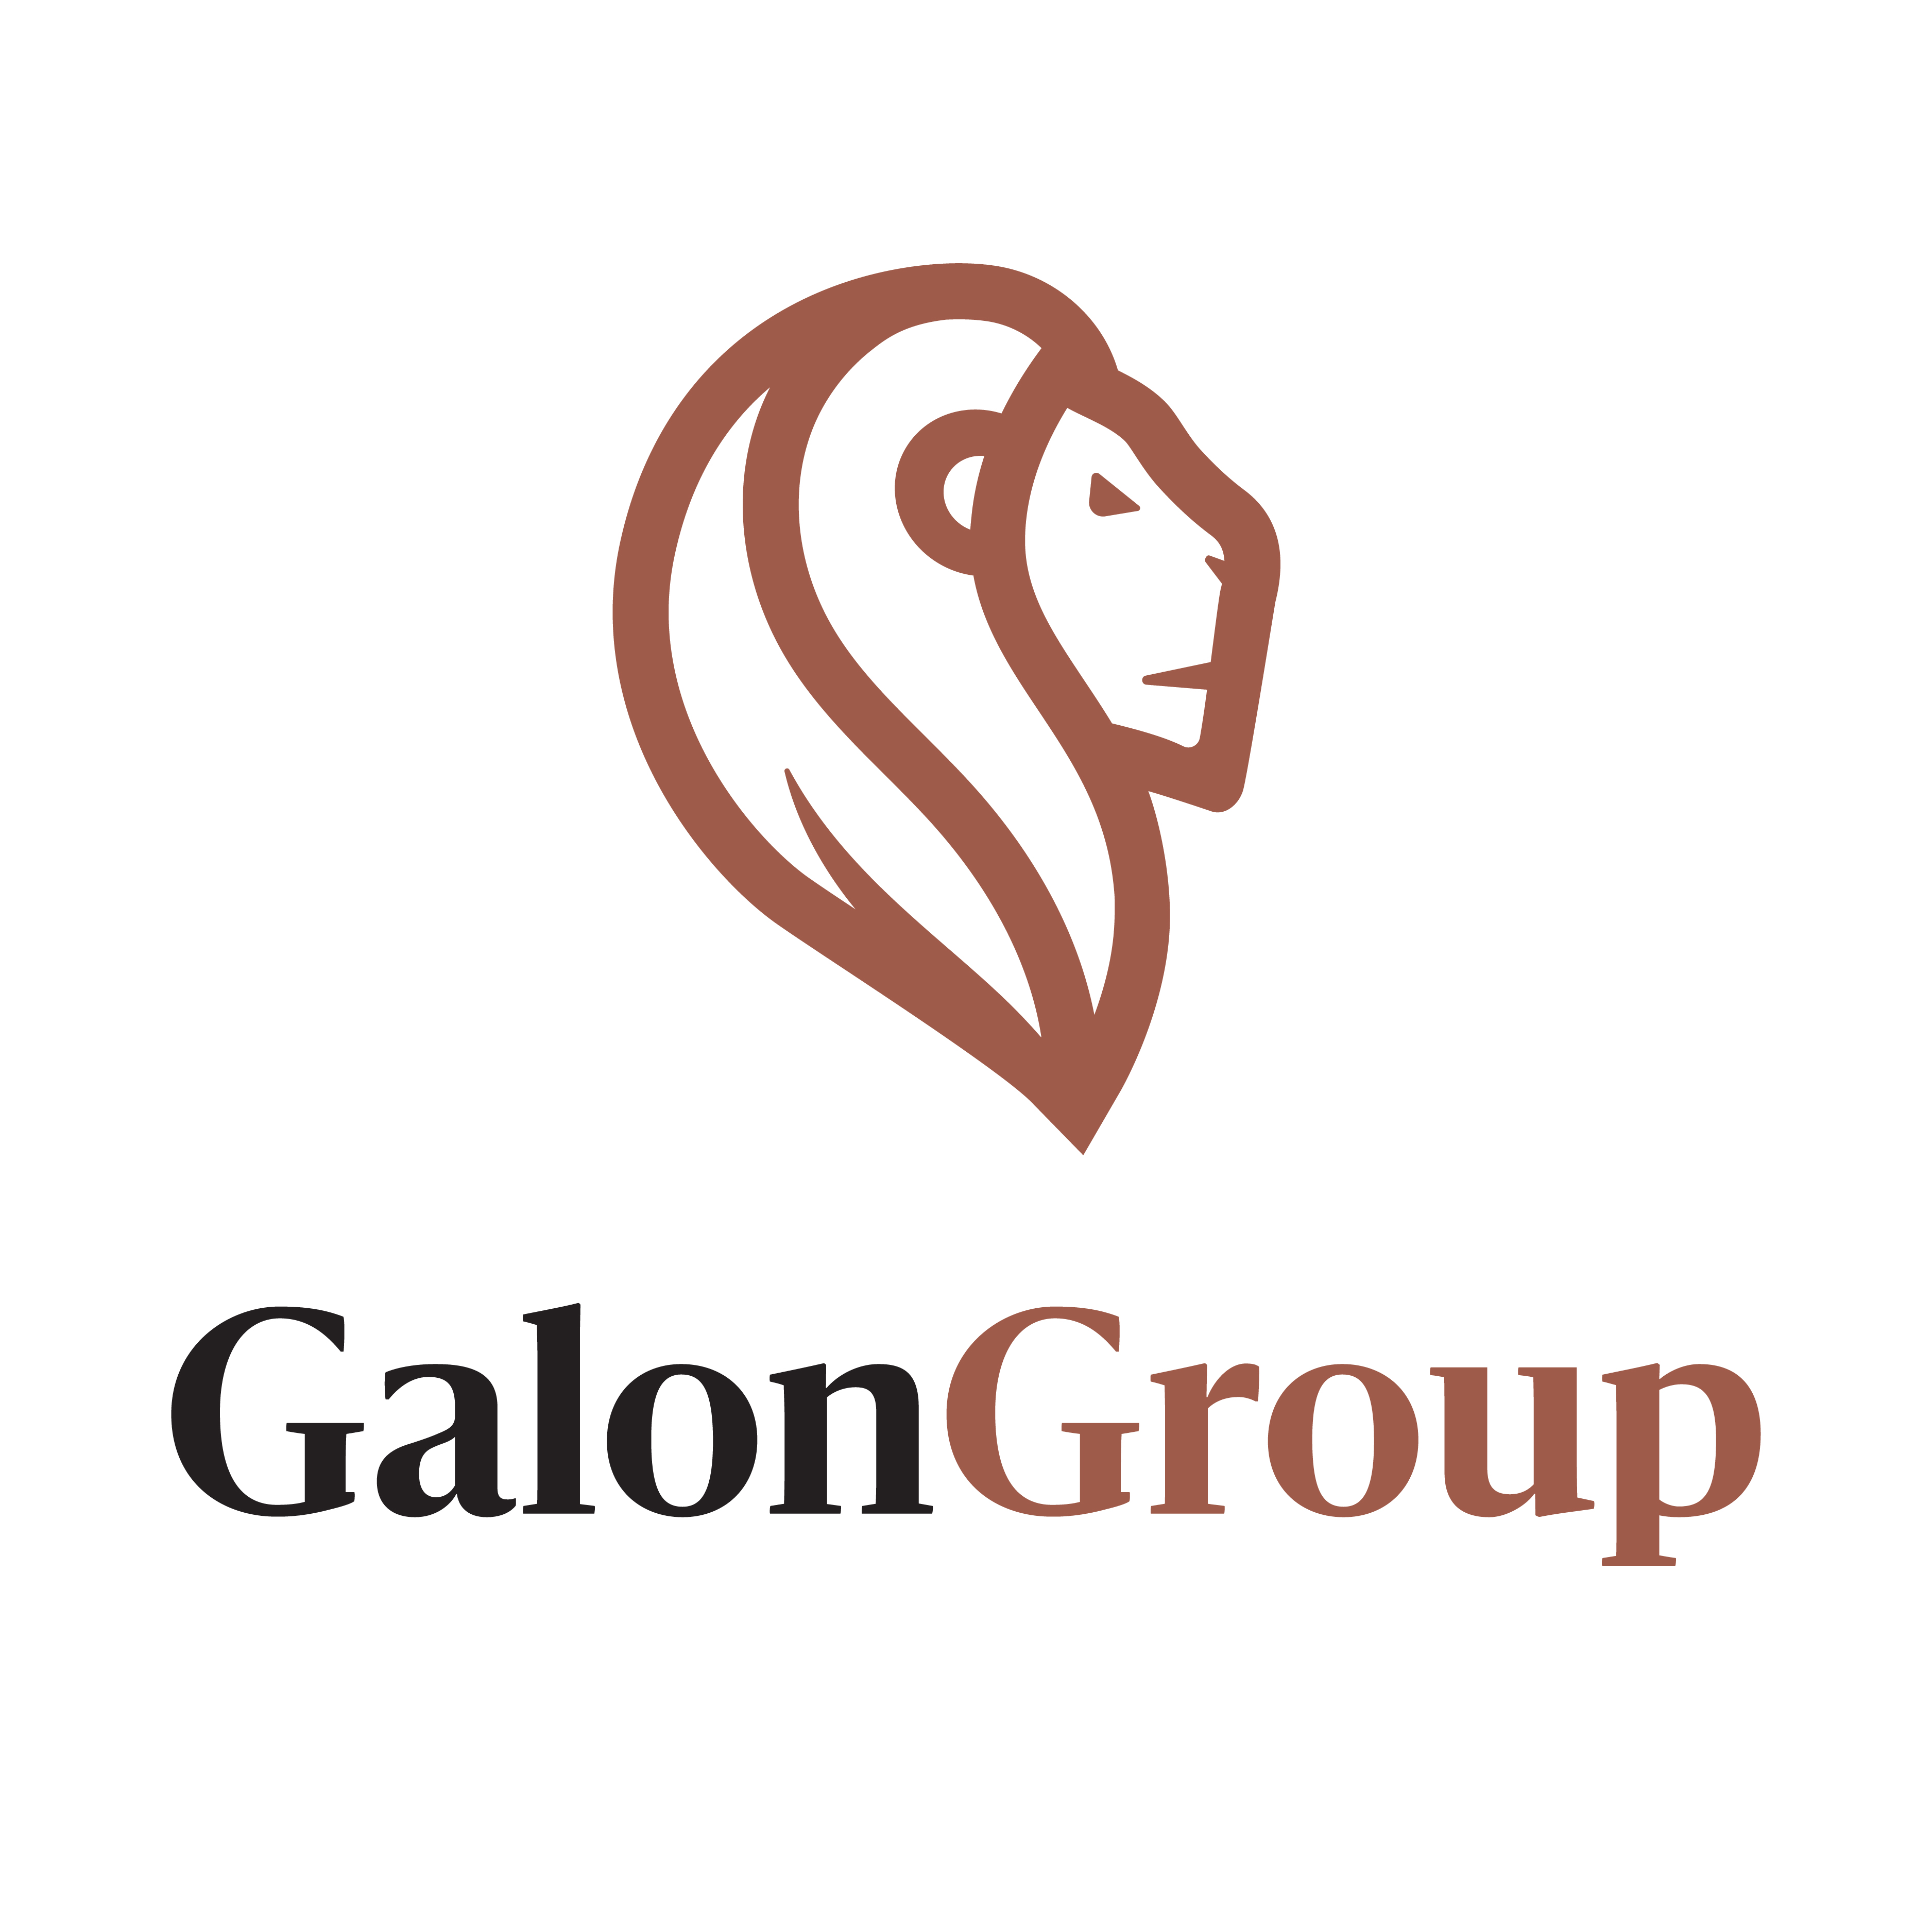 gallongroup_logo logo design by logo designer Motiv Brand Design for your inspiration and for the worlds largest logo competition